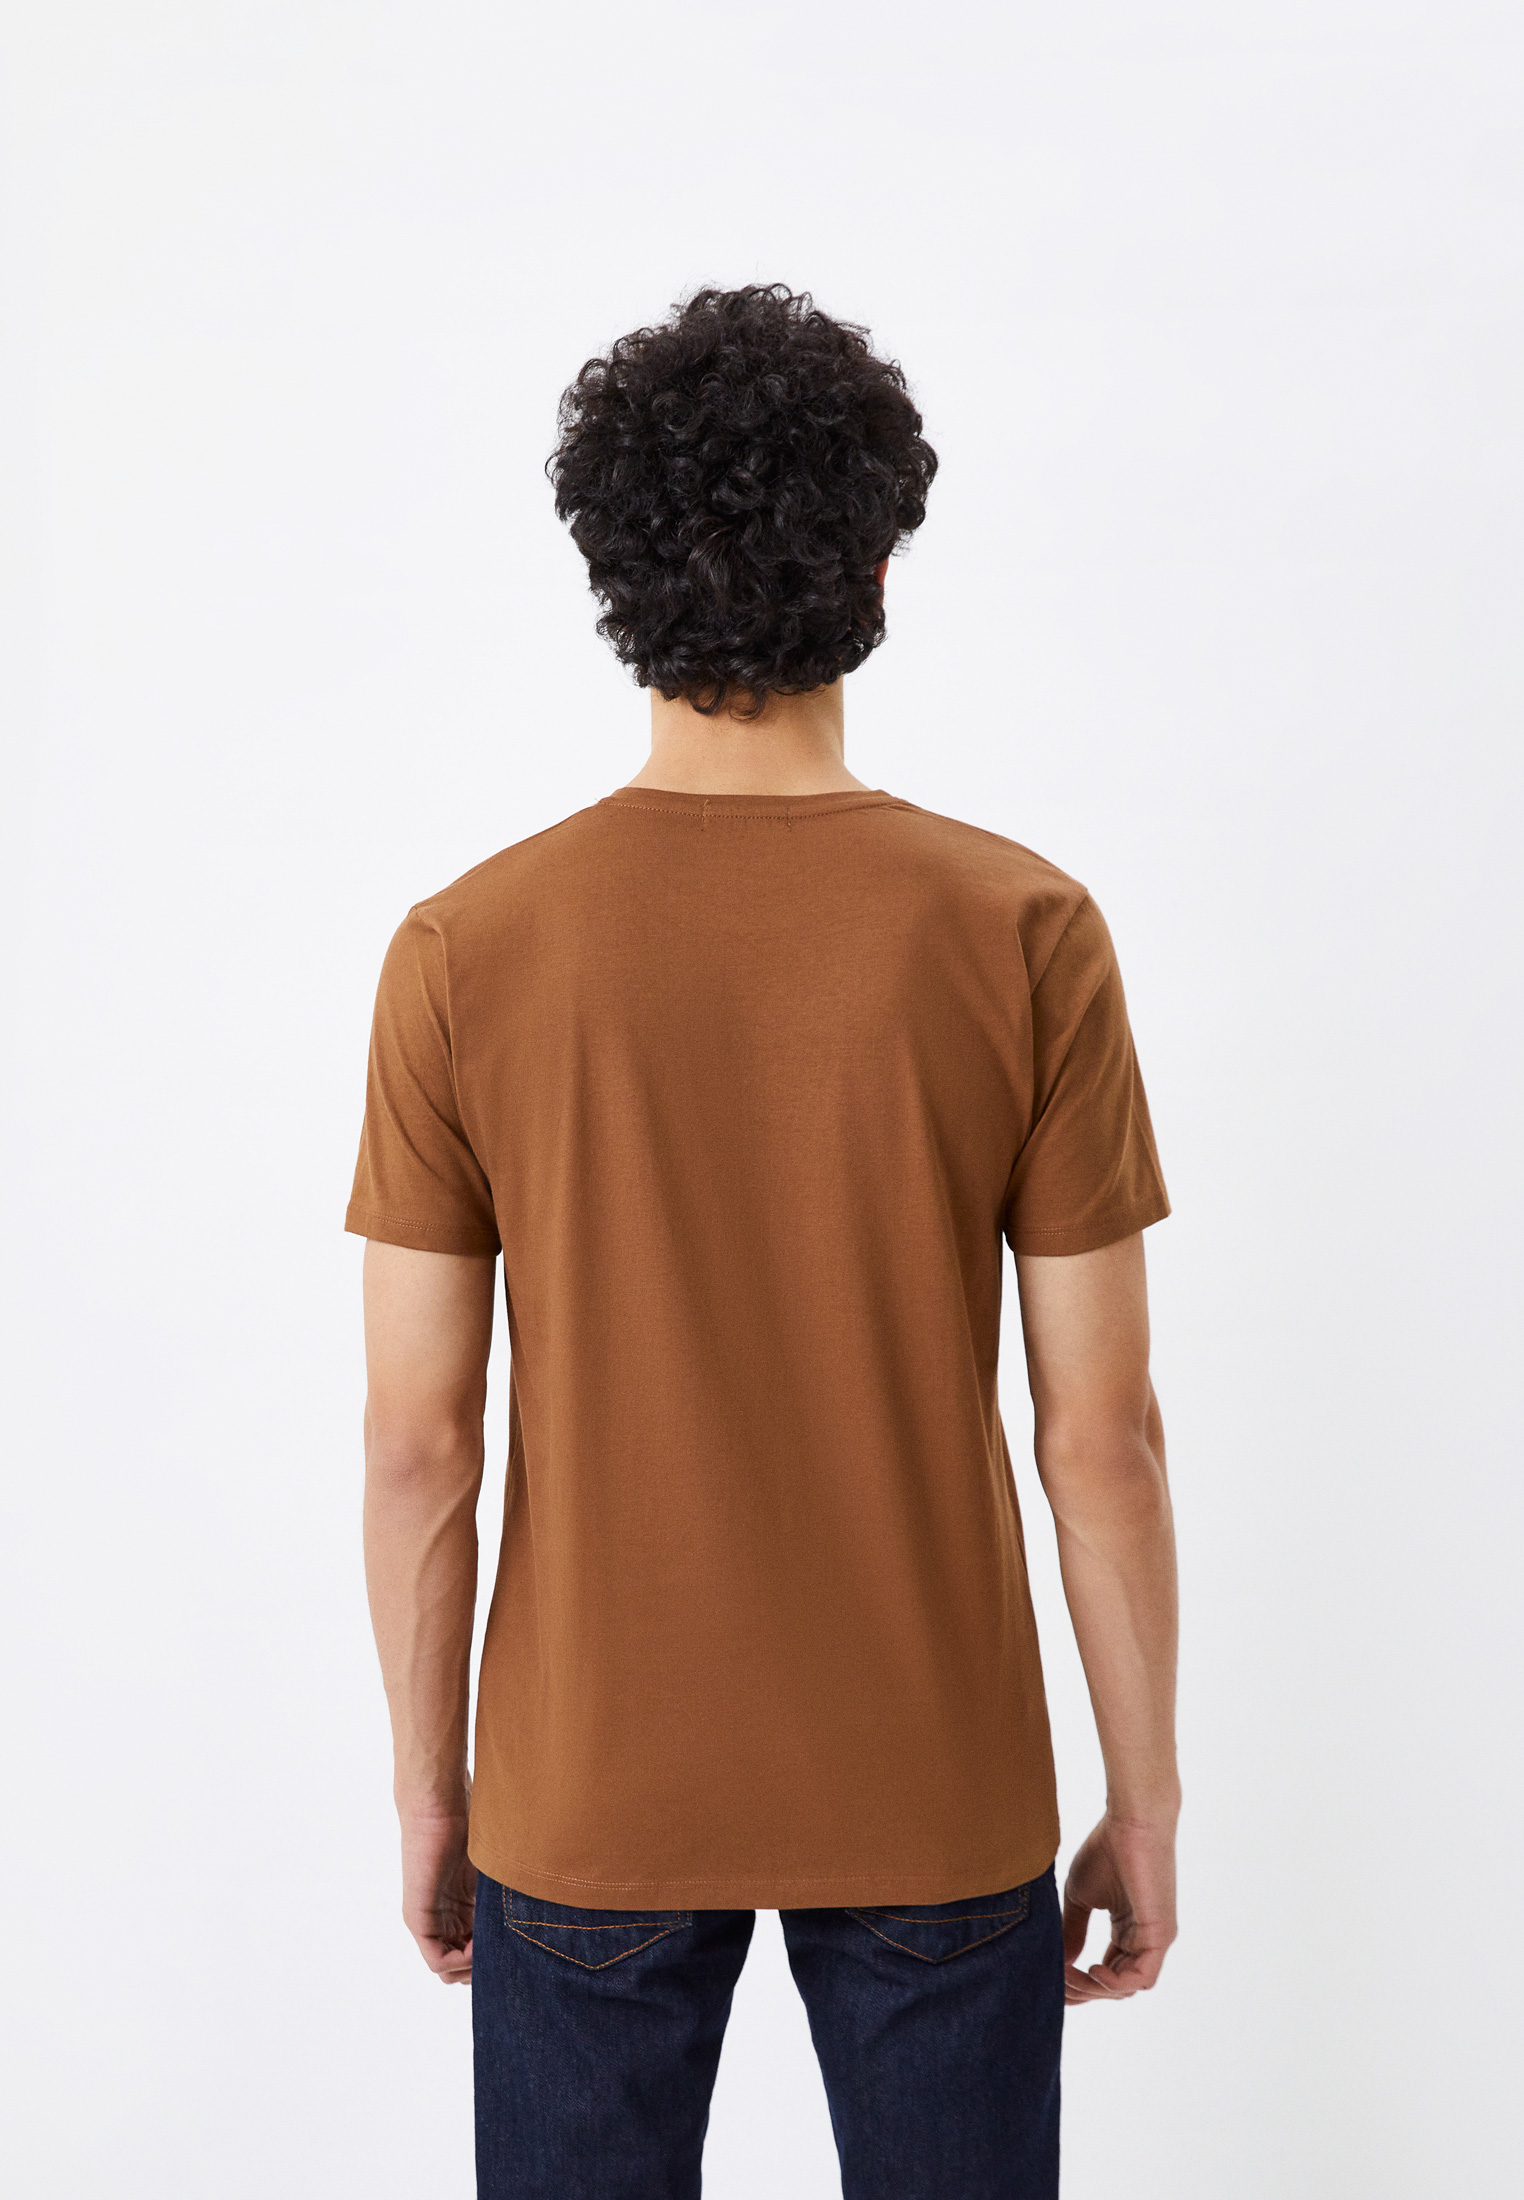 Мужская футболка Baldinini (Балдинини) BDO-M046: изображение 3